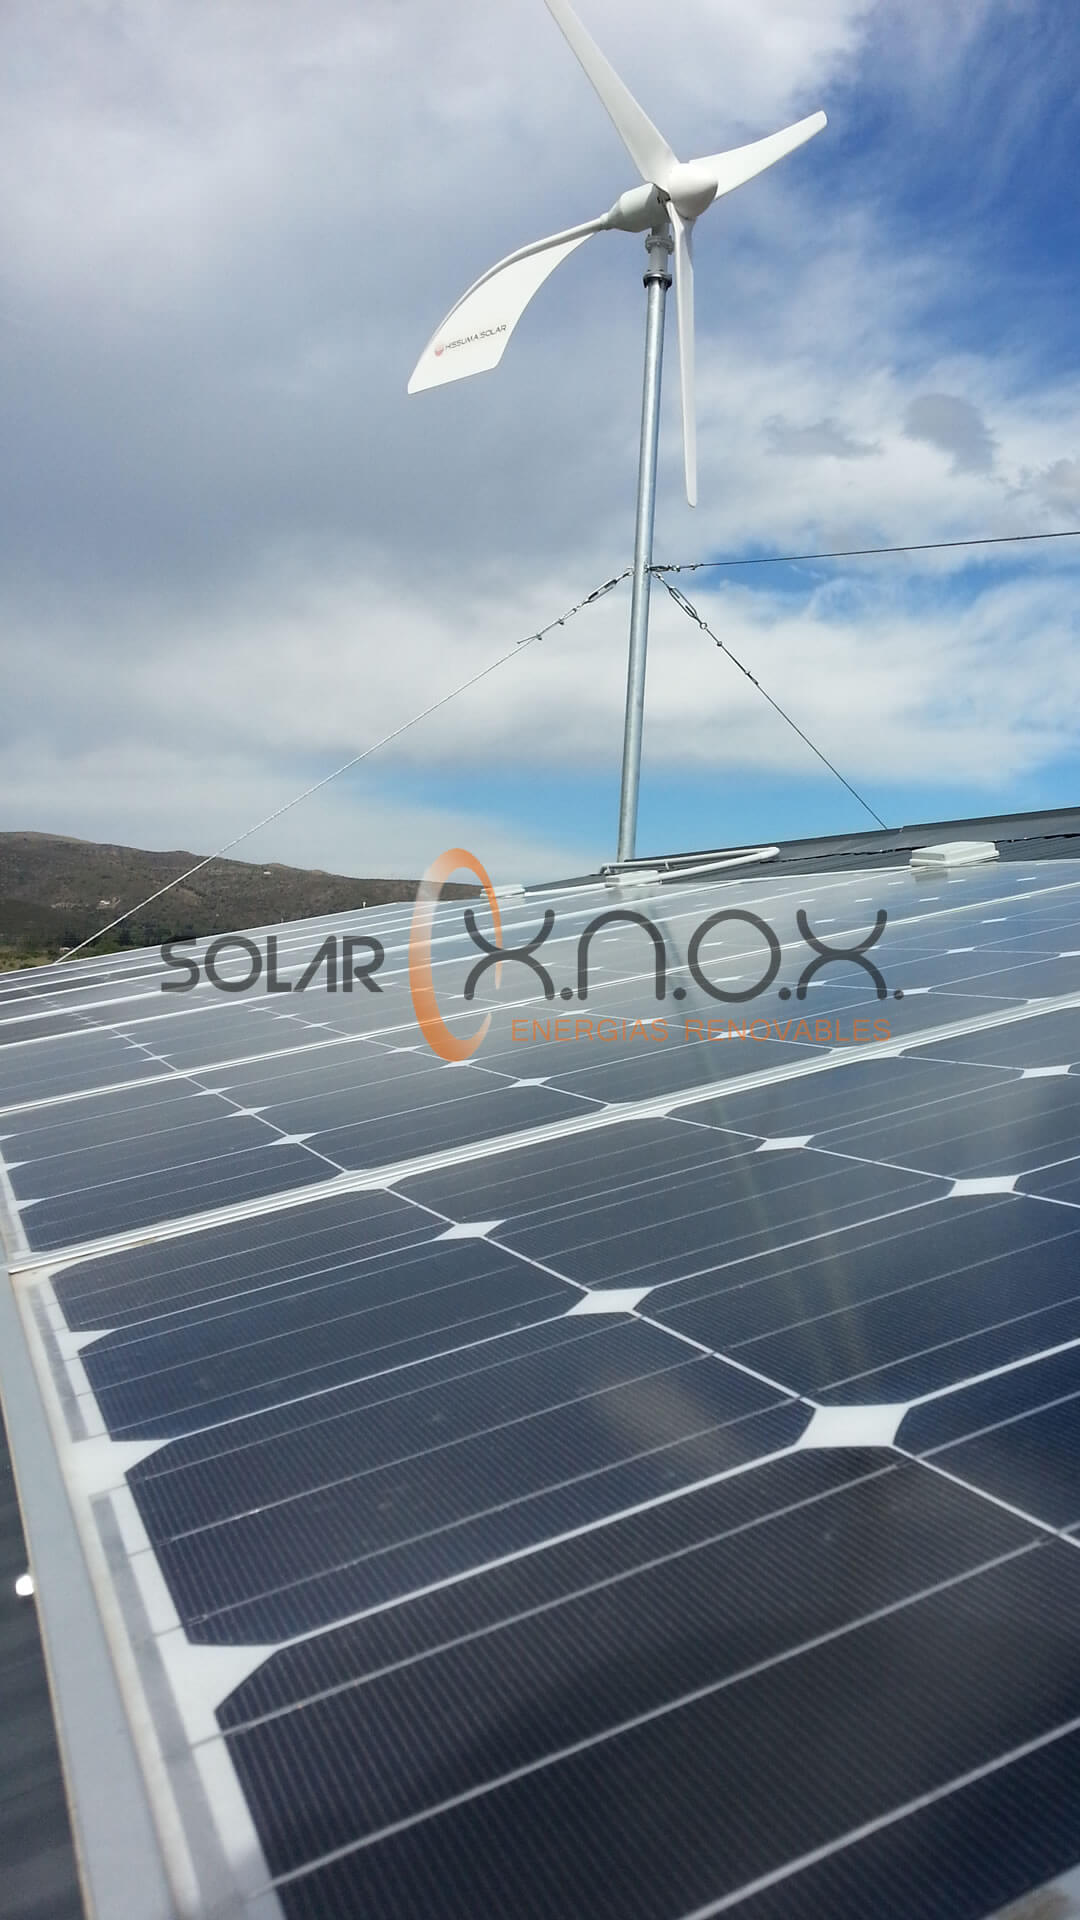 Solarxnox80